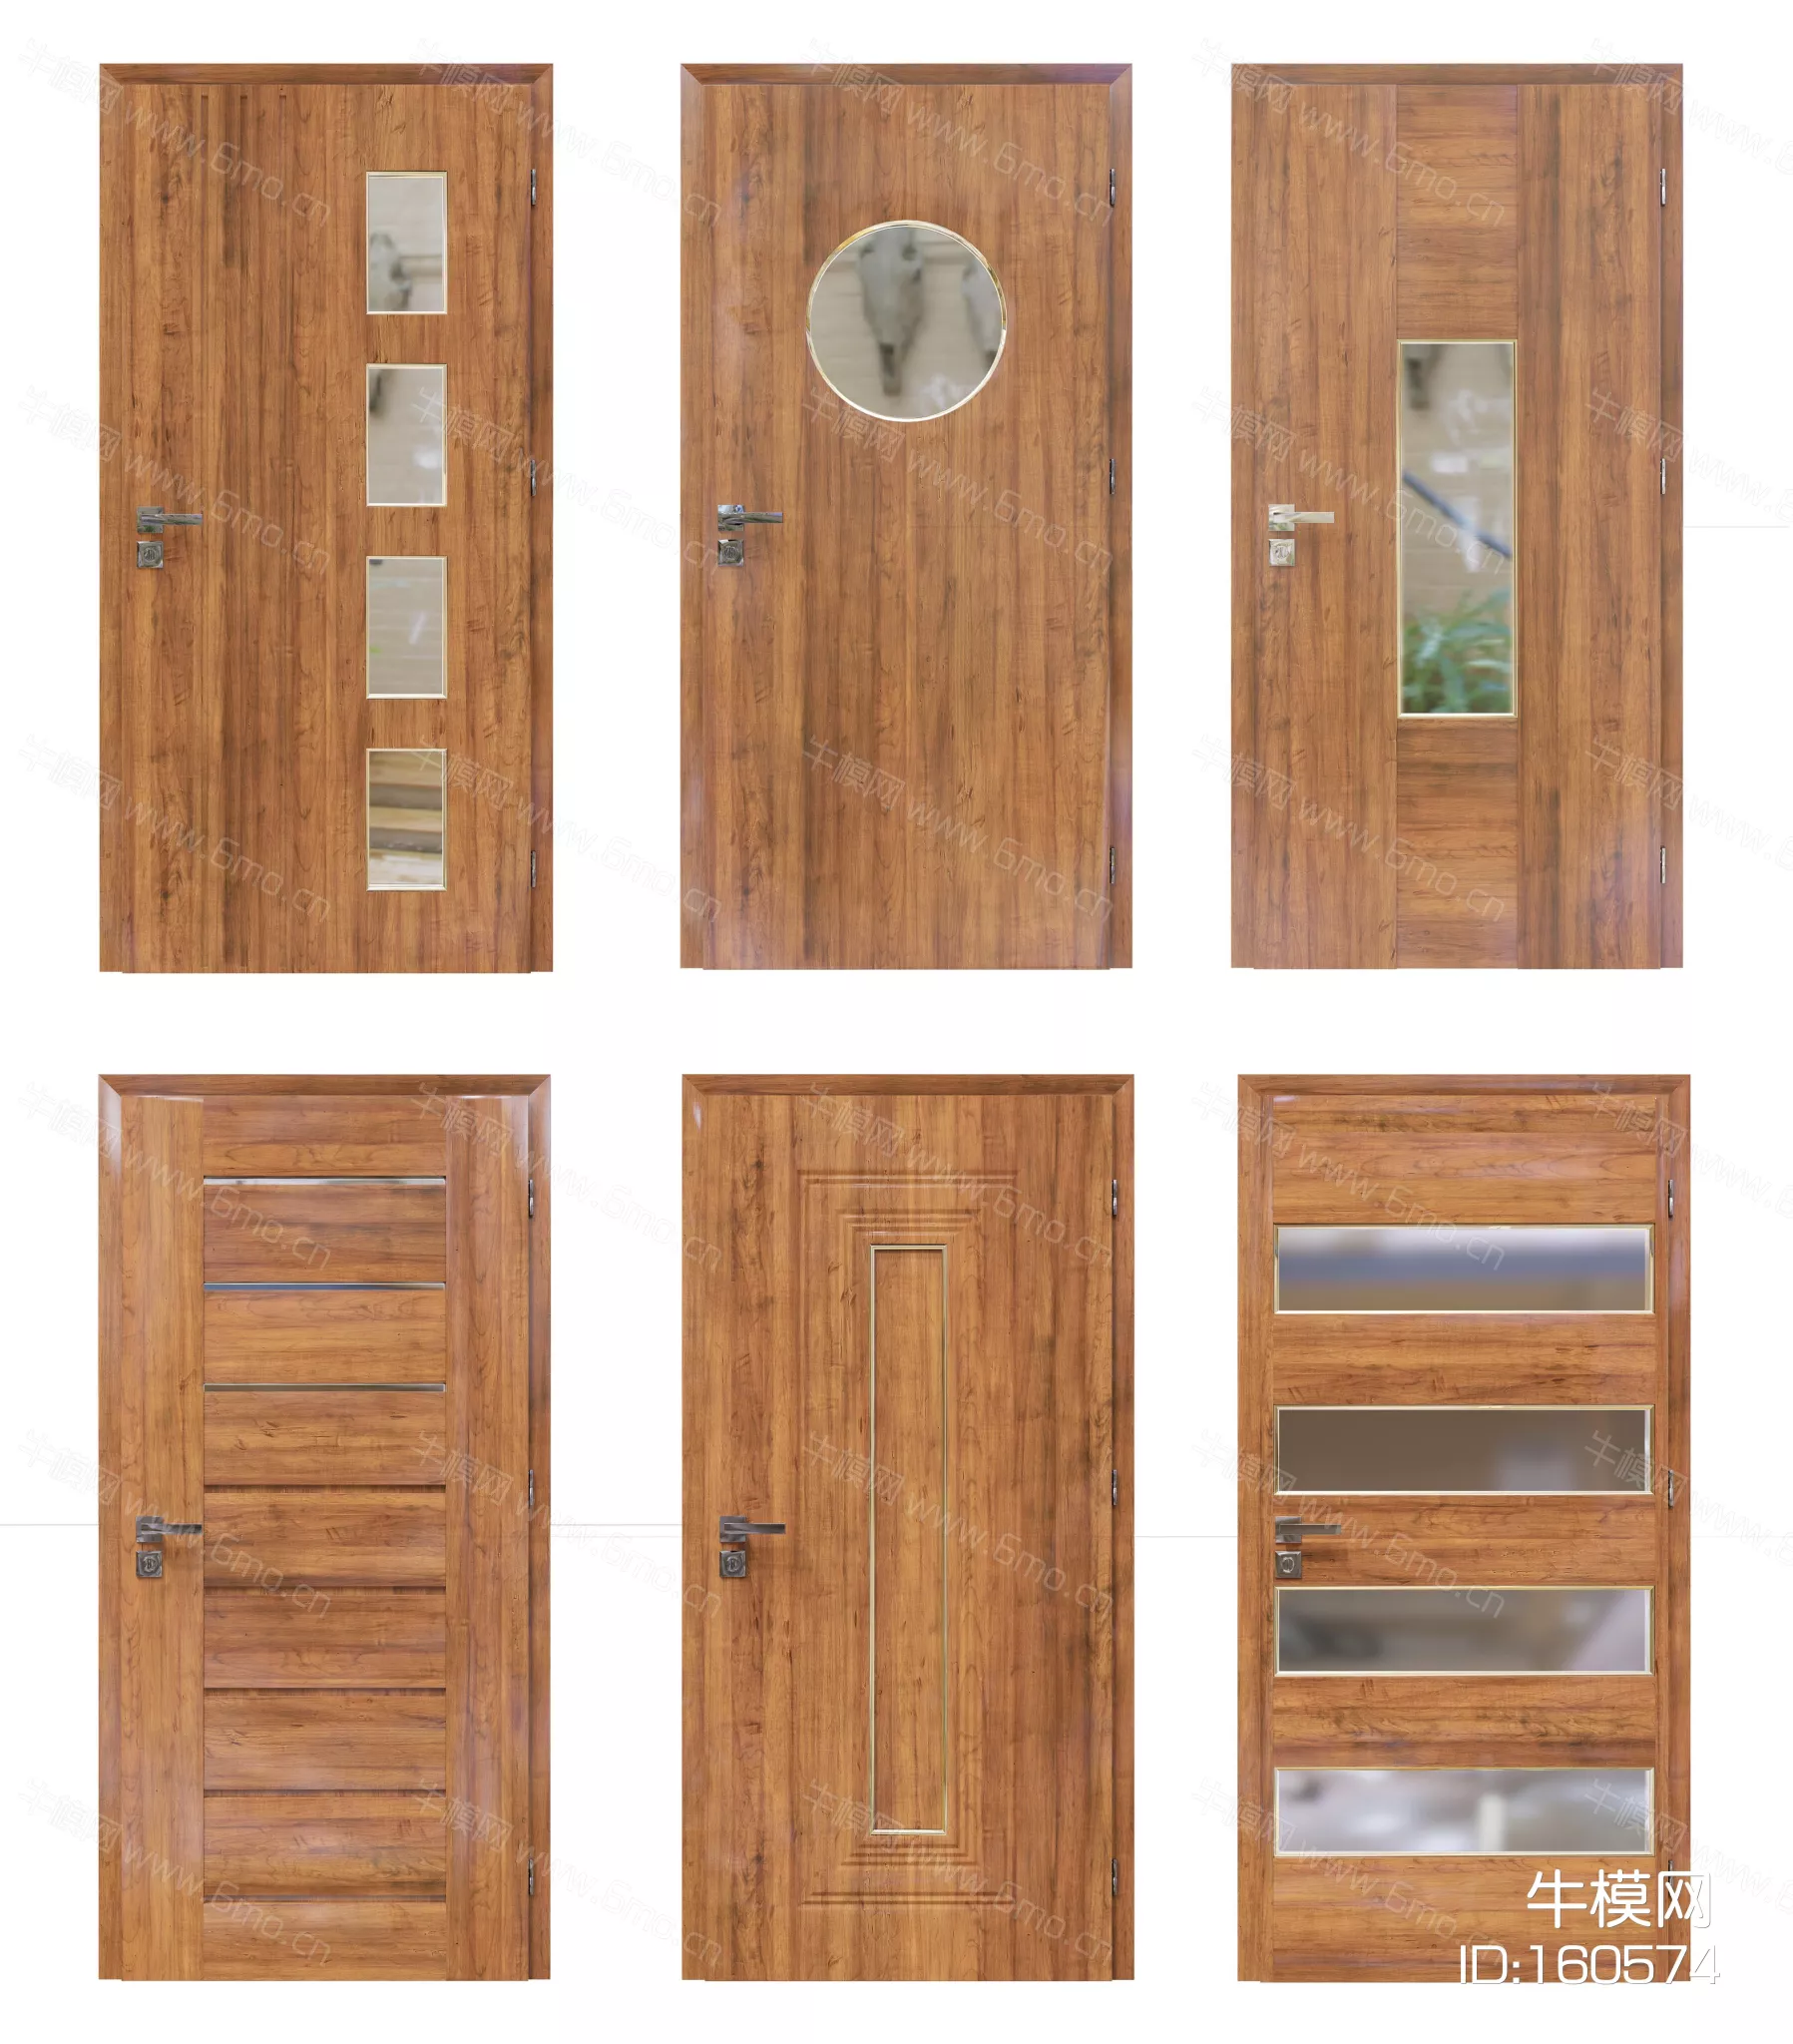 MODERN DOOR AND WINDOWS - SKETCHUP 3D MODEL - ENSCAPE - 160574